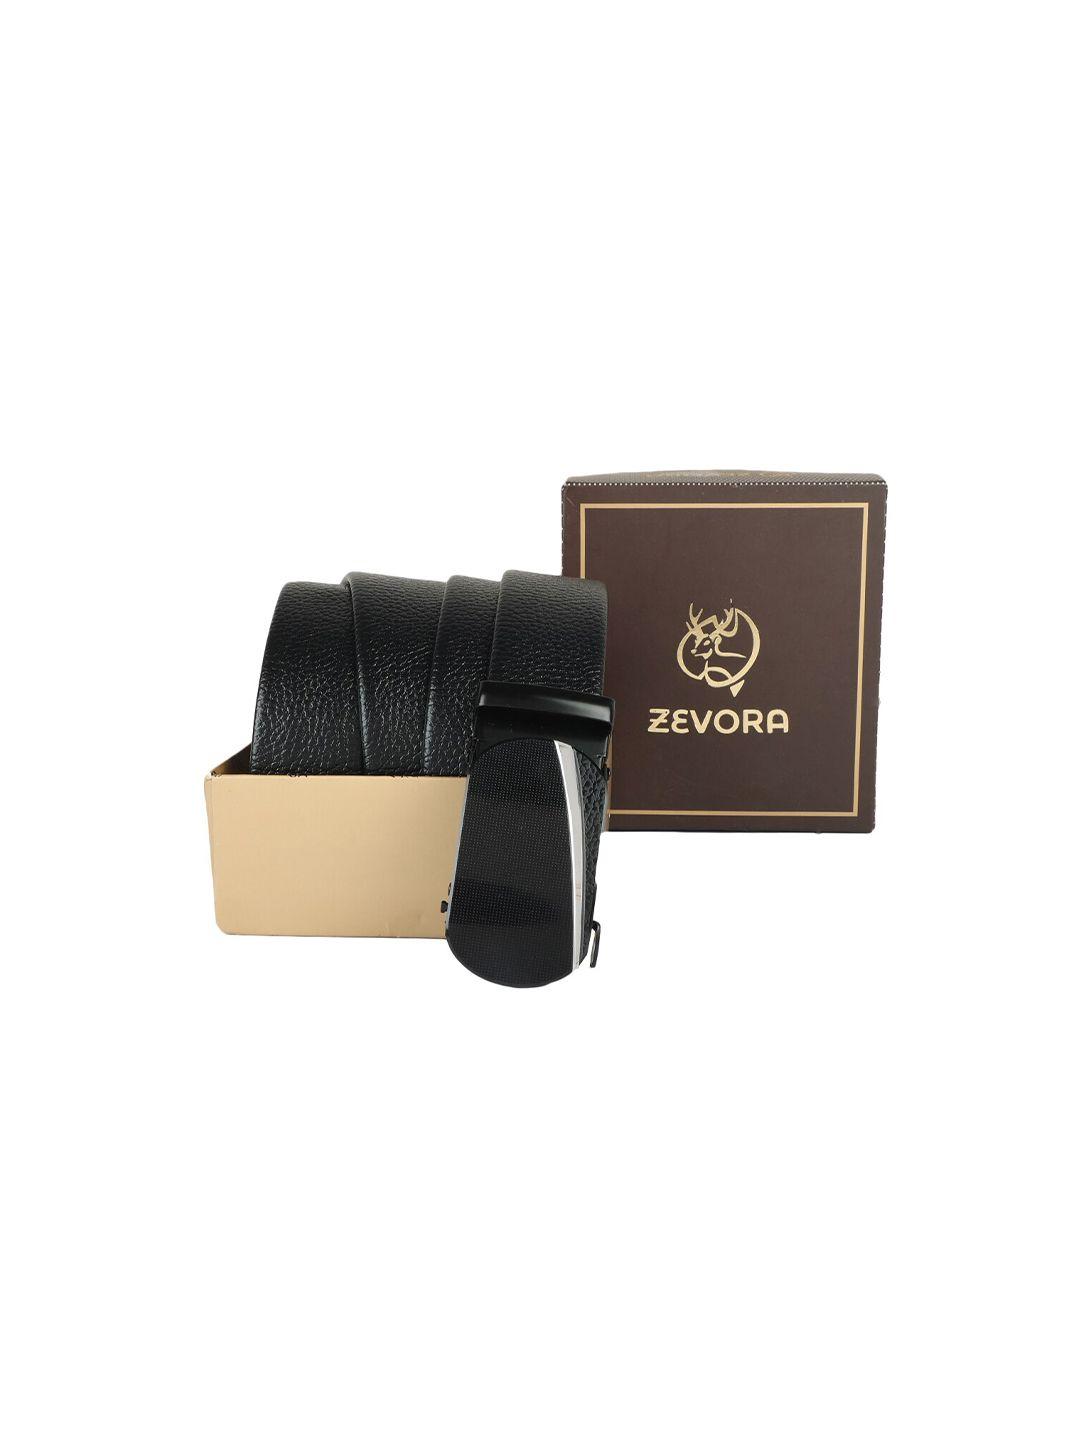 zevora men textured leather formal belt